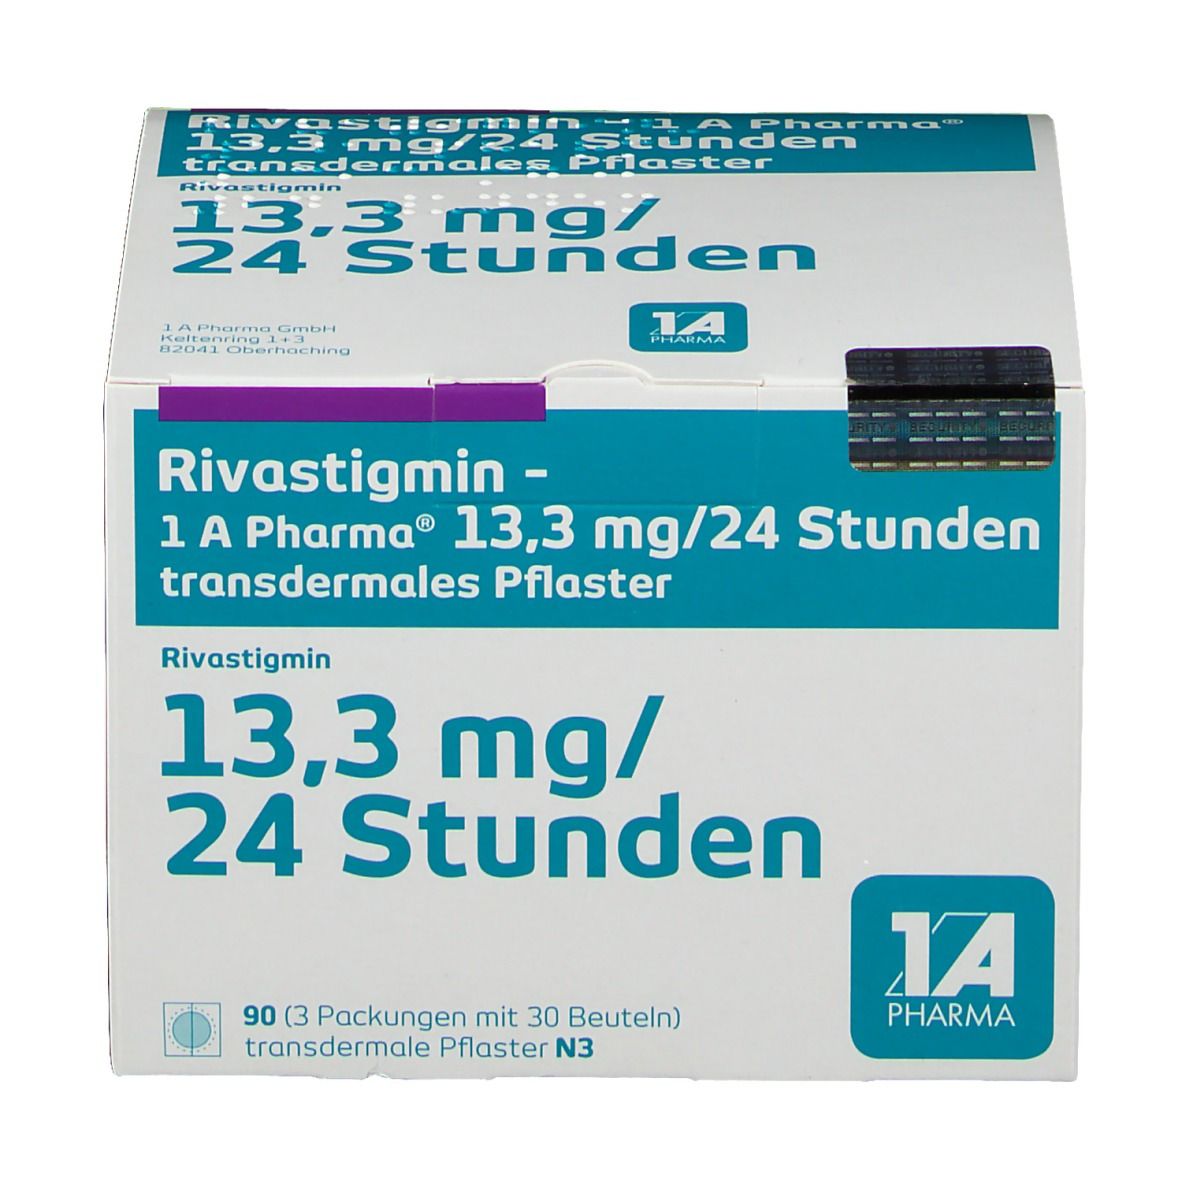 Rivastigmin - 1 A Pharma® 13,3 mg/24 Stunden